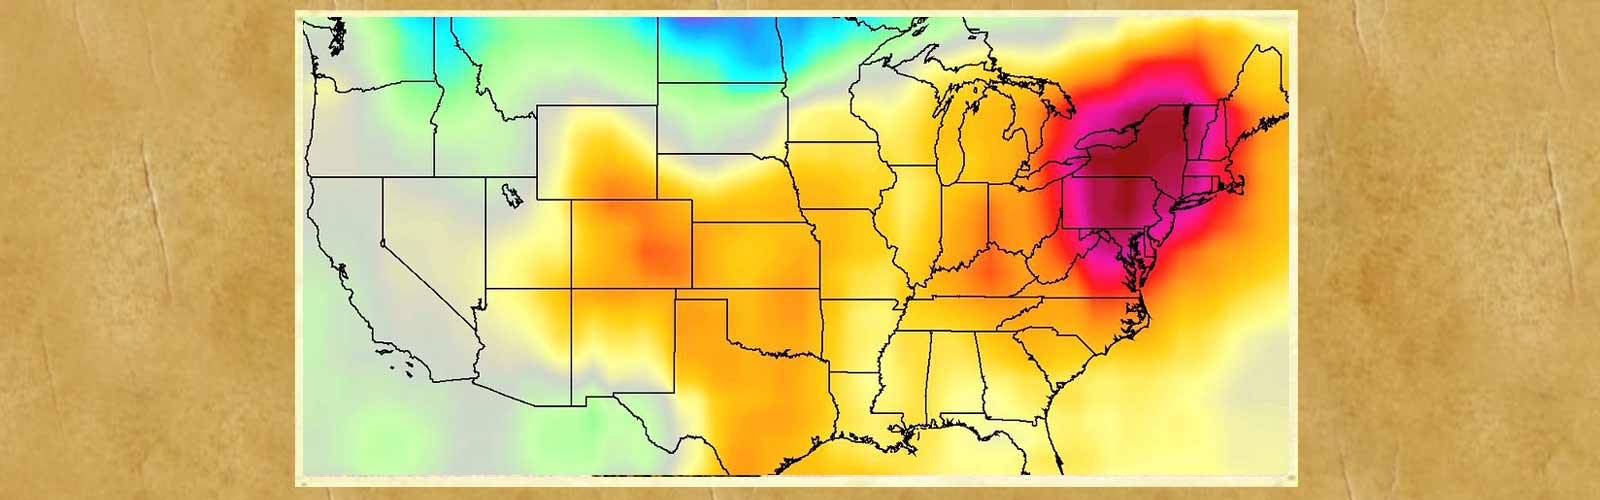 Heat Wave Map of America